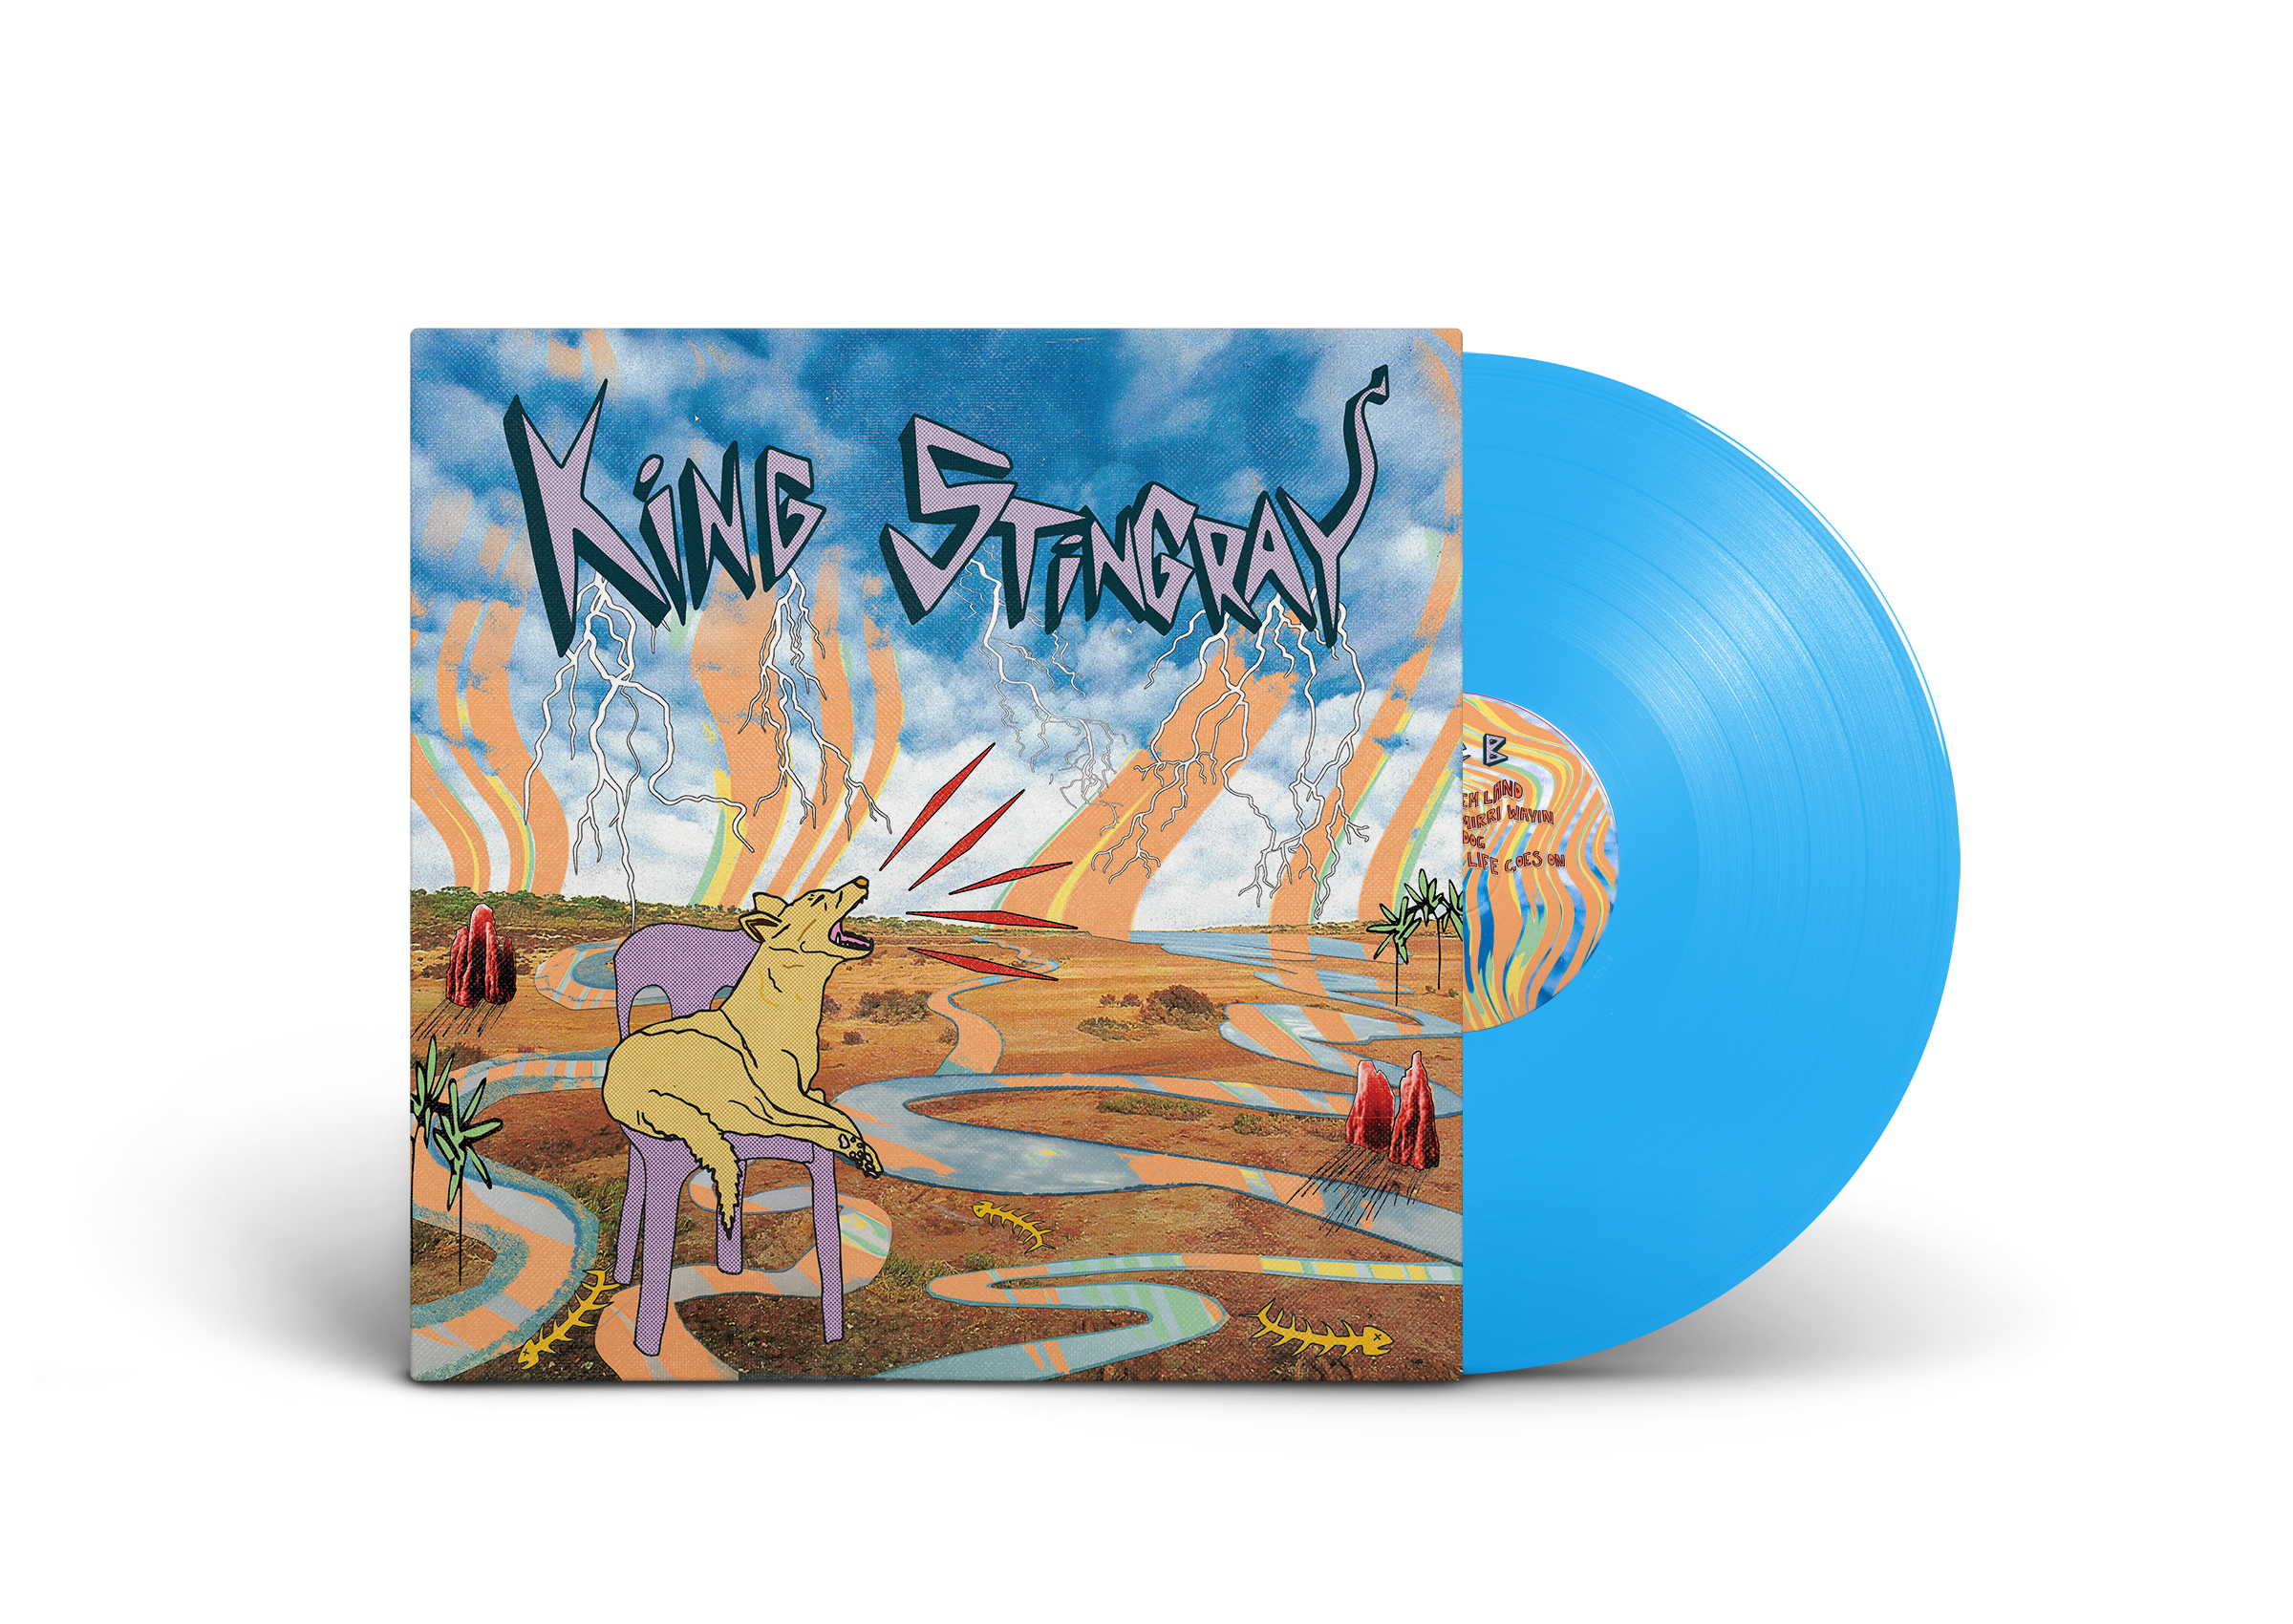 Limited Edition Blue Vinyl